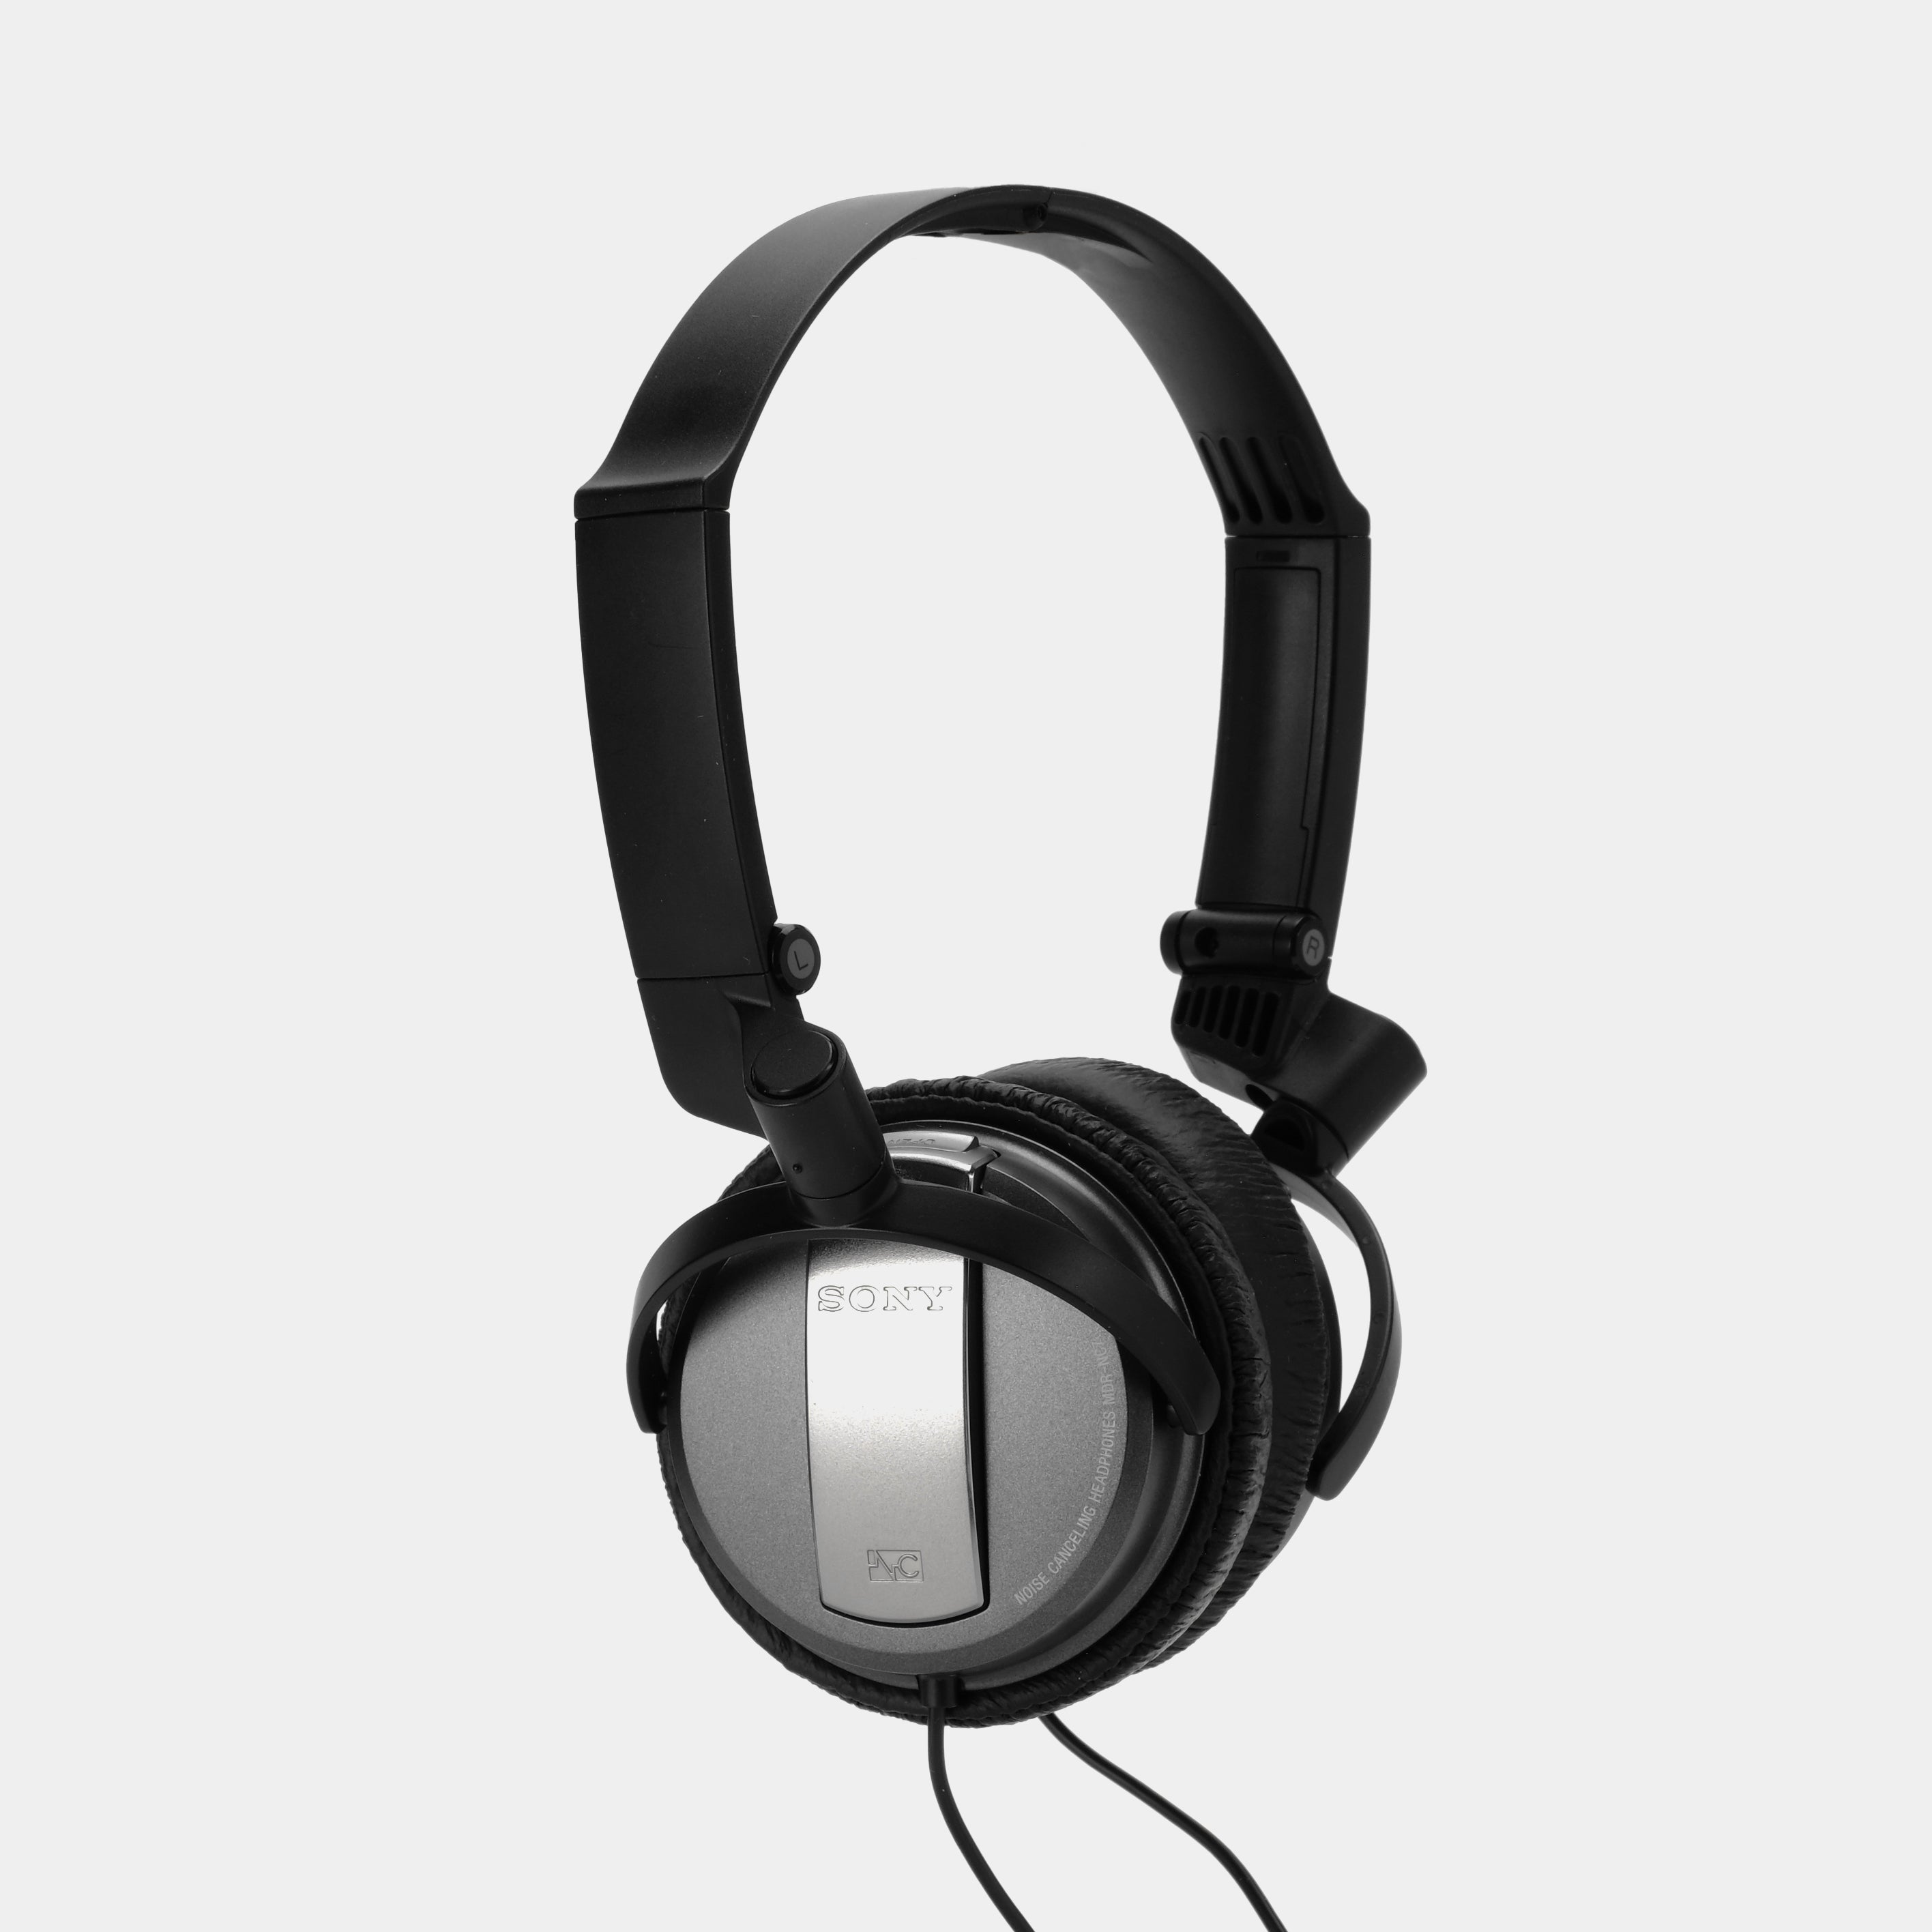 Sony MDR-NC7 Noise Canceling On-Ear Headphones